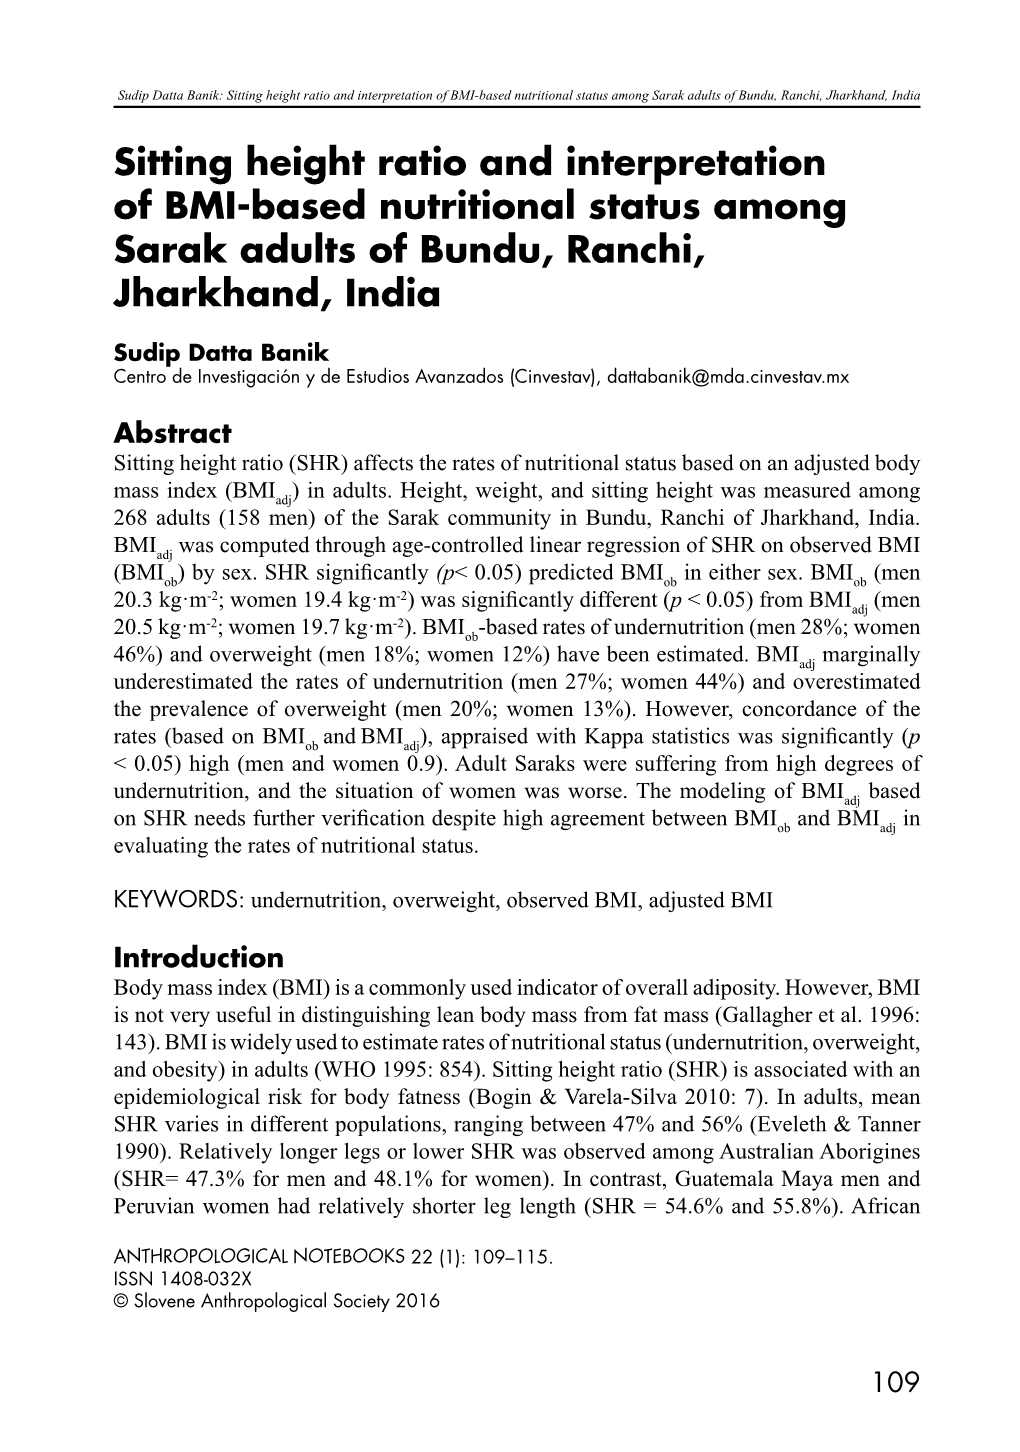 Sitting Height Ratio and Interpretation of BMI-Based Nutritional Status Among Sarak Adults of Bundu, Ranchi, Jharkhand, India